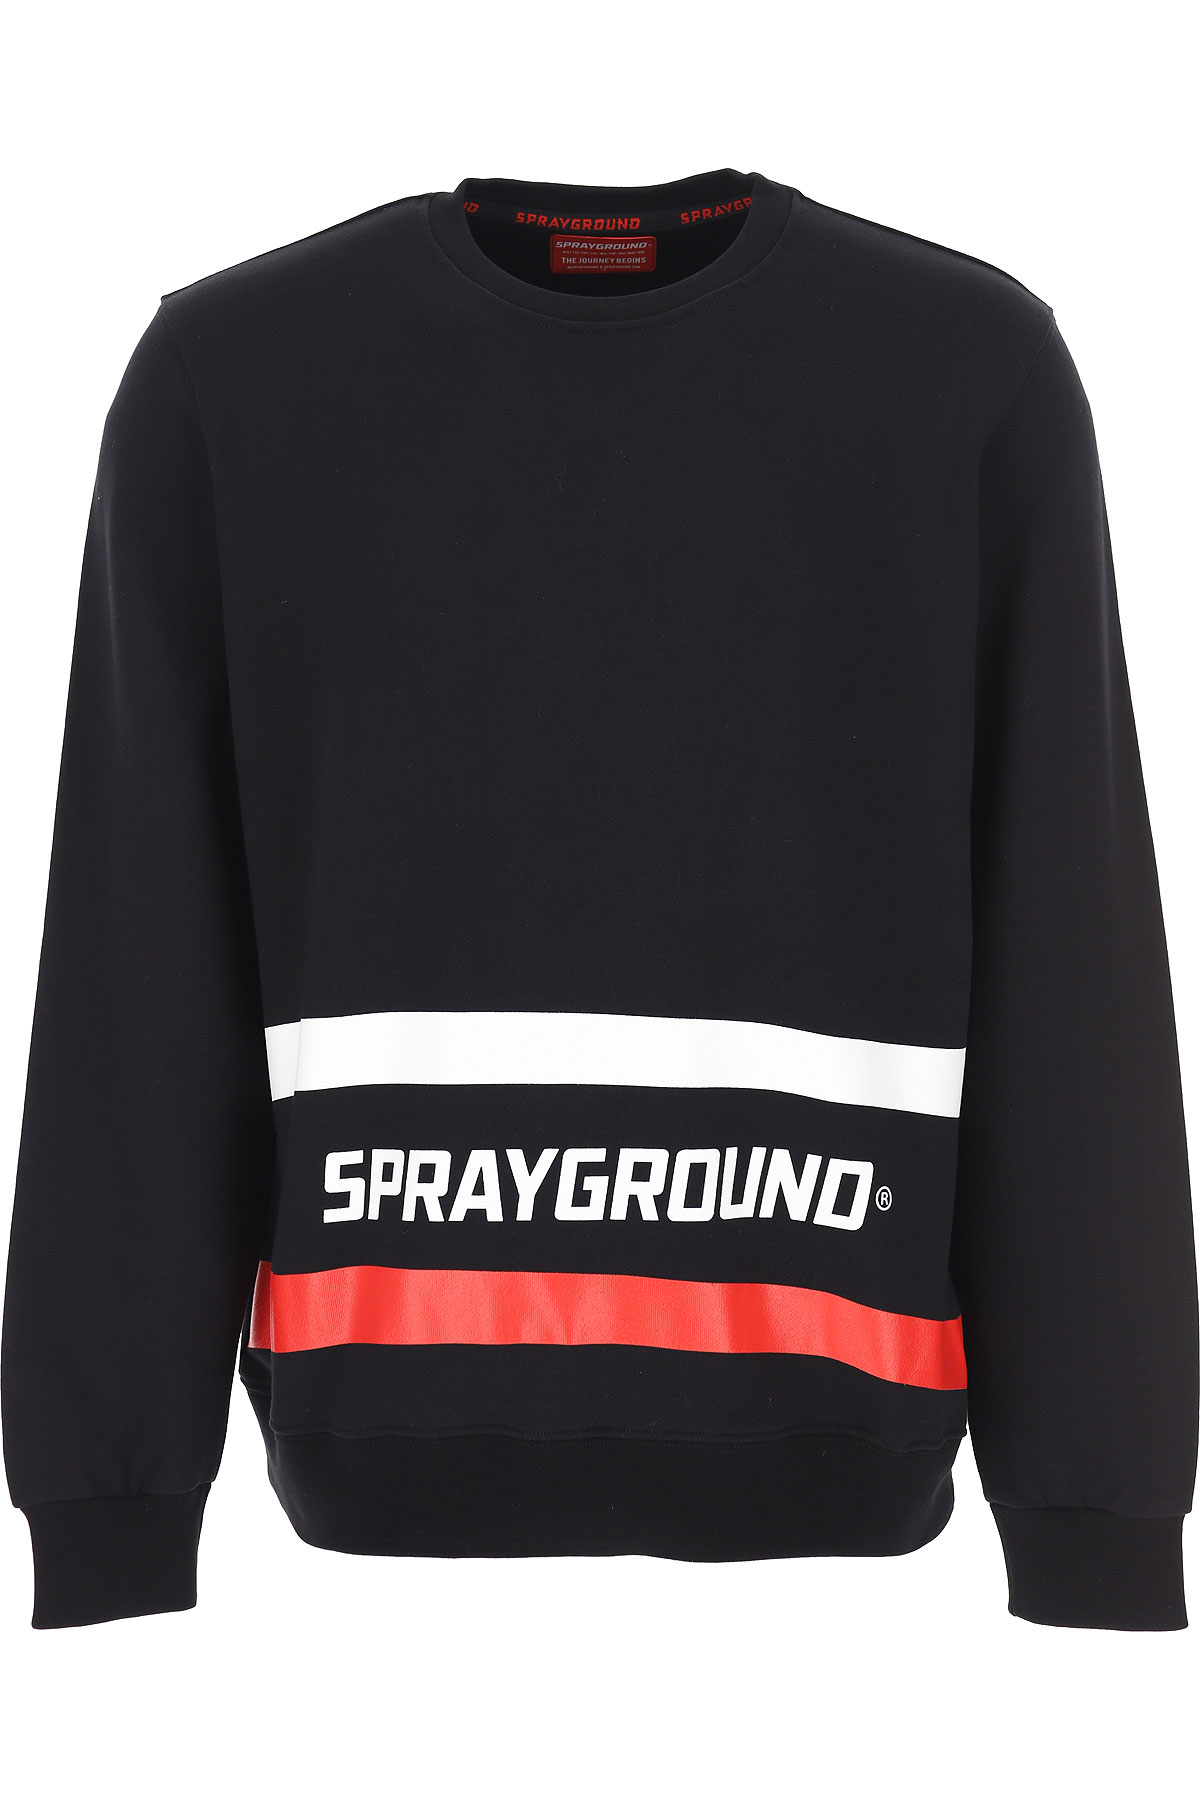 Mens Clothing Sprayground, Style code: sp163-black-